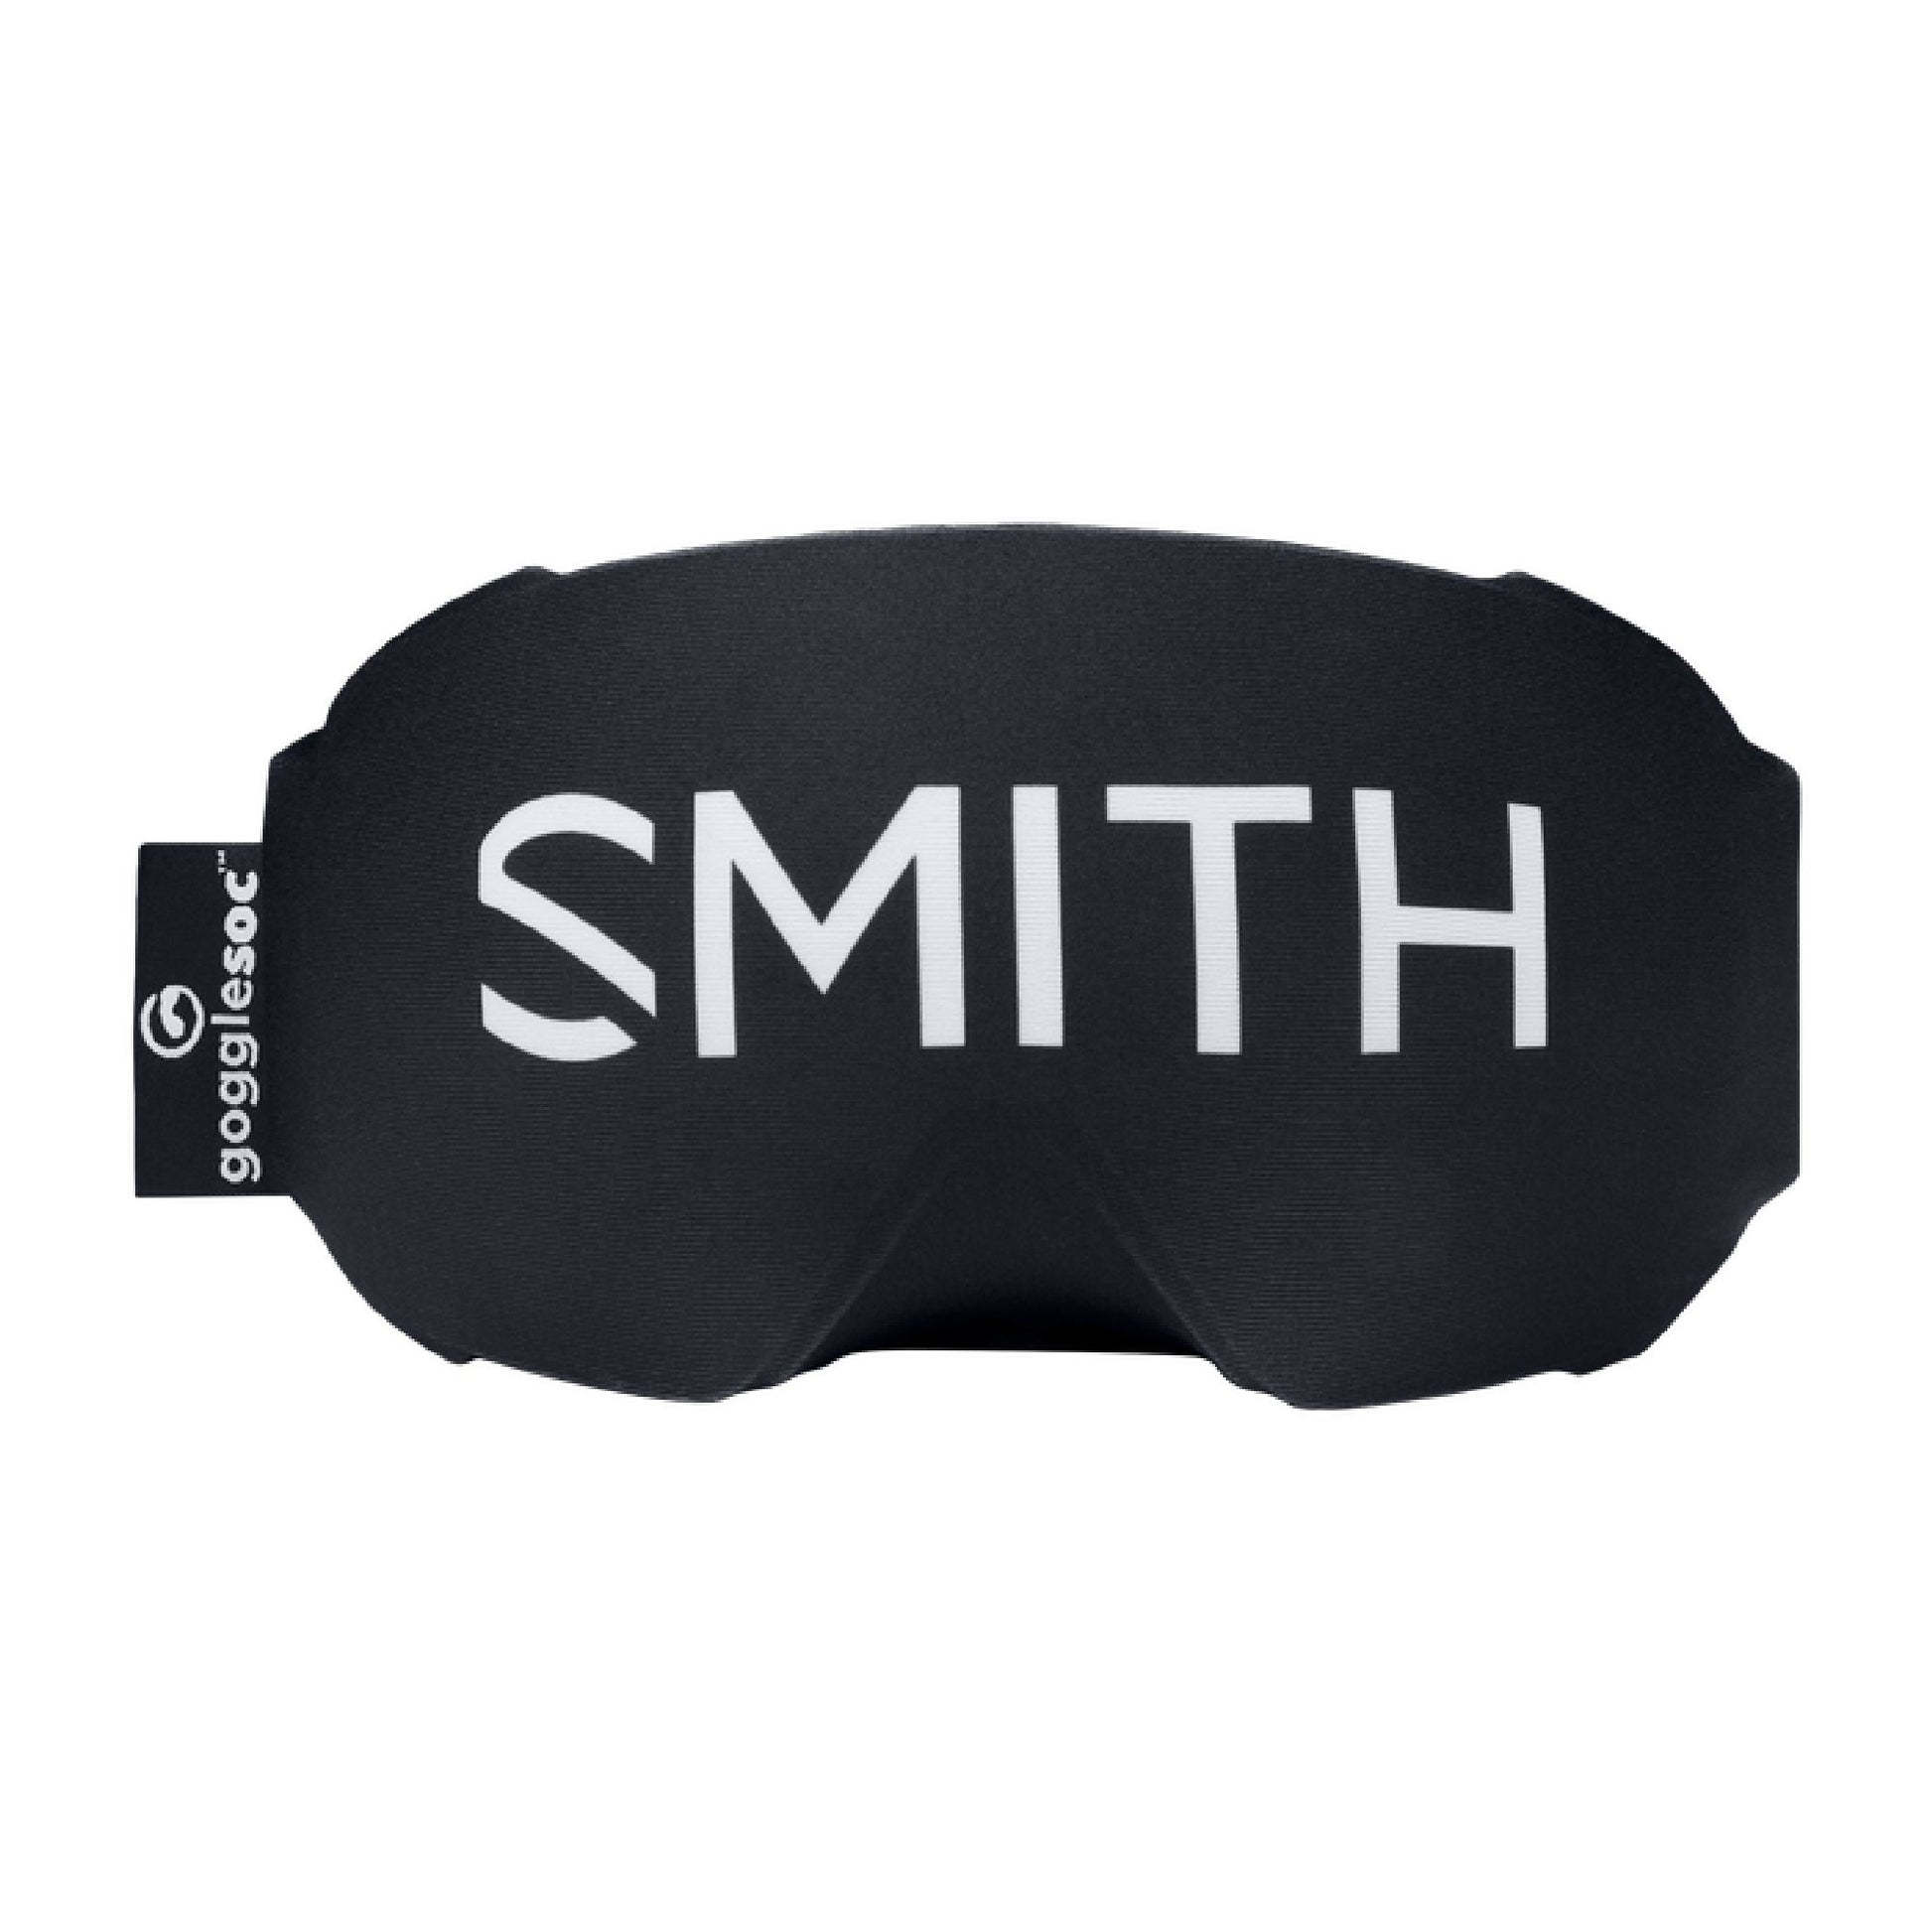 Smith I/O MAG XL Snow Goggle Black / ChromaPop Sun Red Mirror Snow Goggles